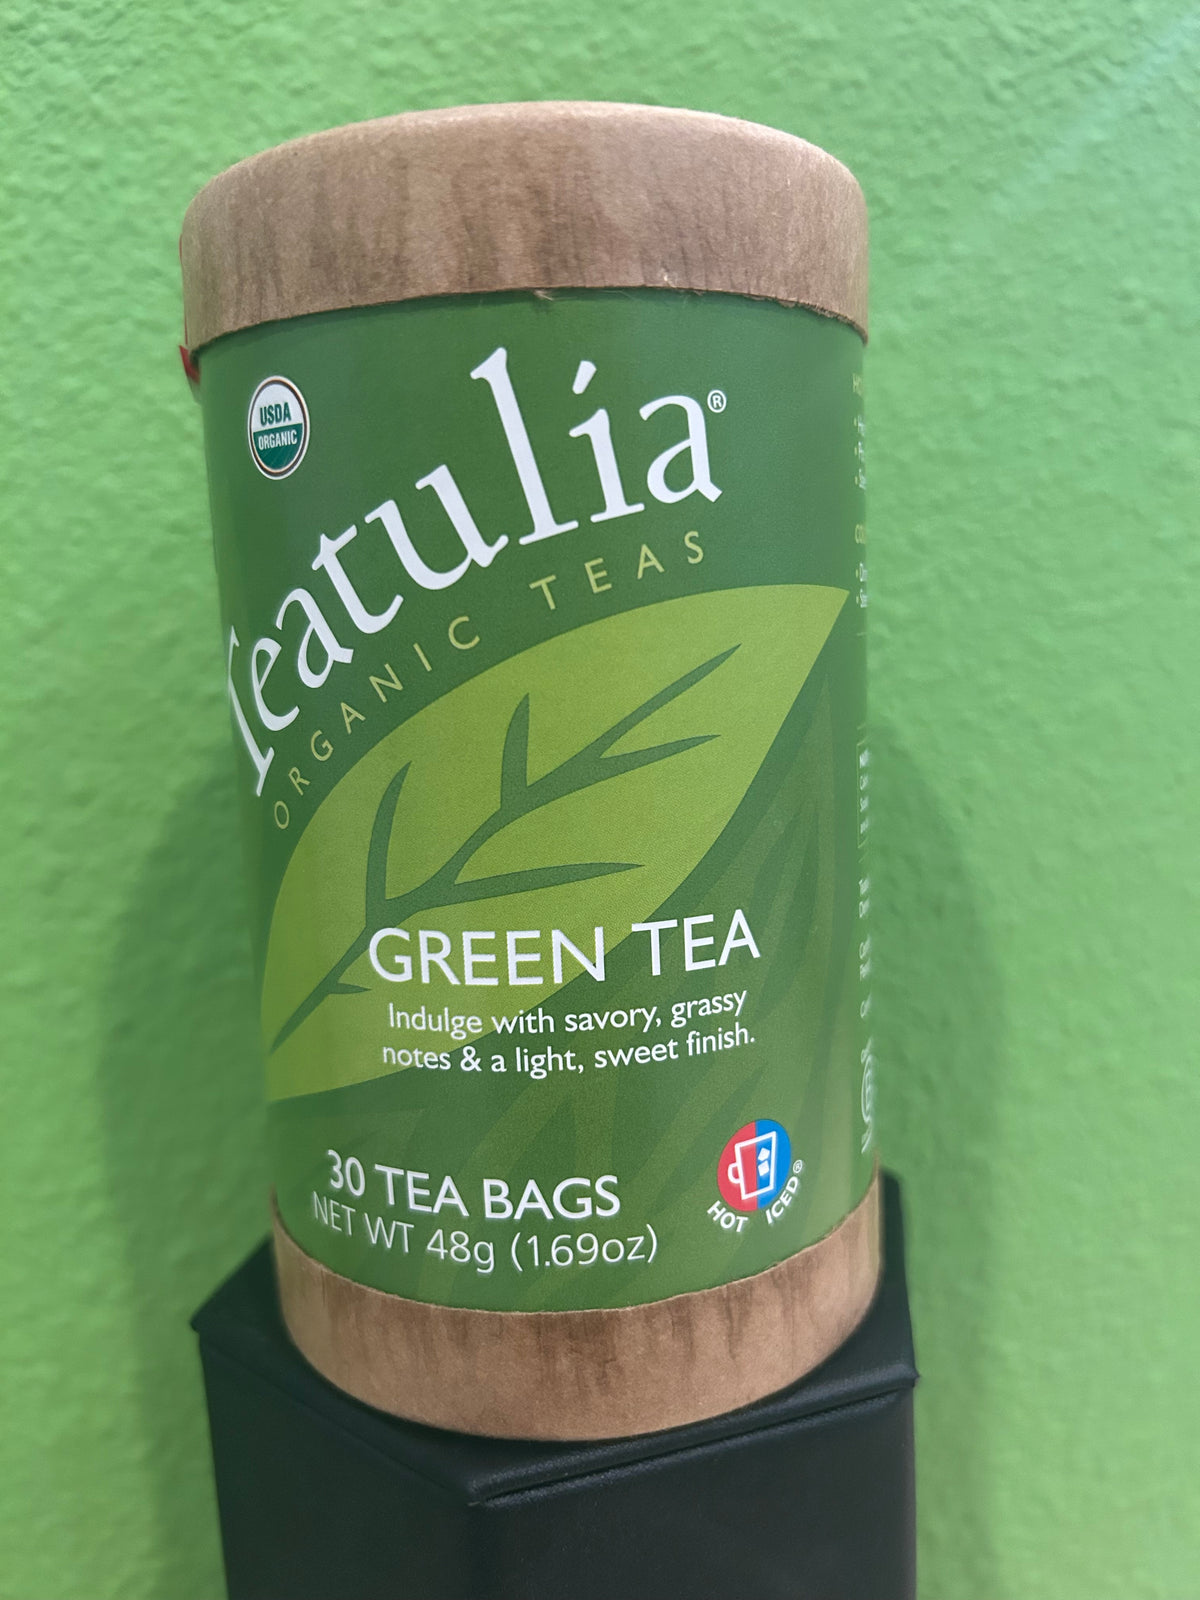 Teatulia Organic Teas-Green Tea